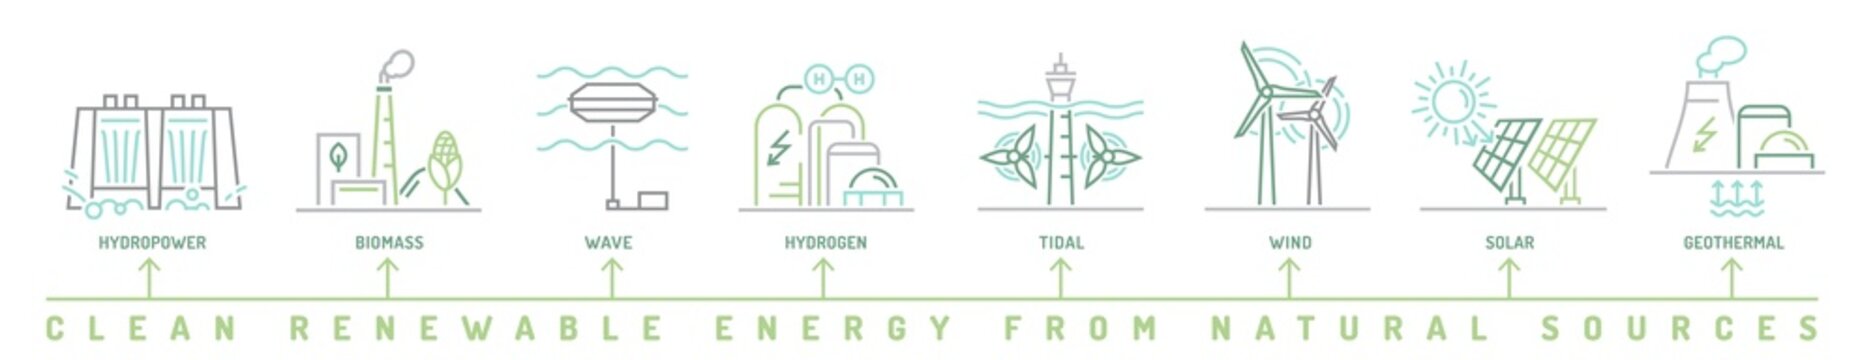 Renewable energy types. Outline icons. Editable illustration © Double Brain